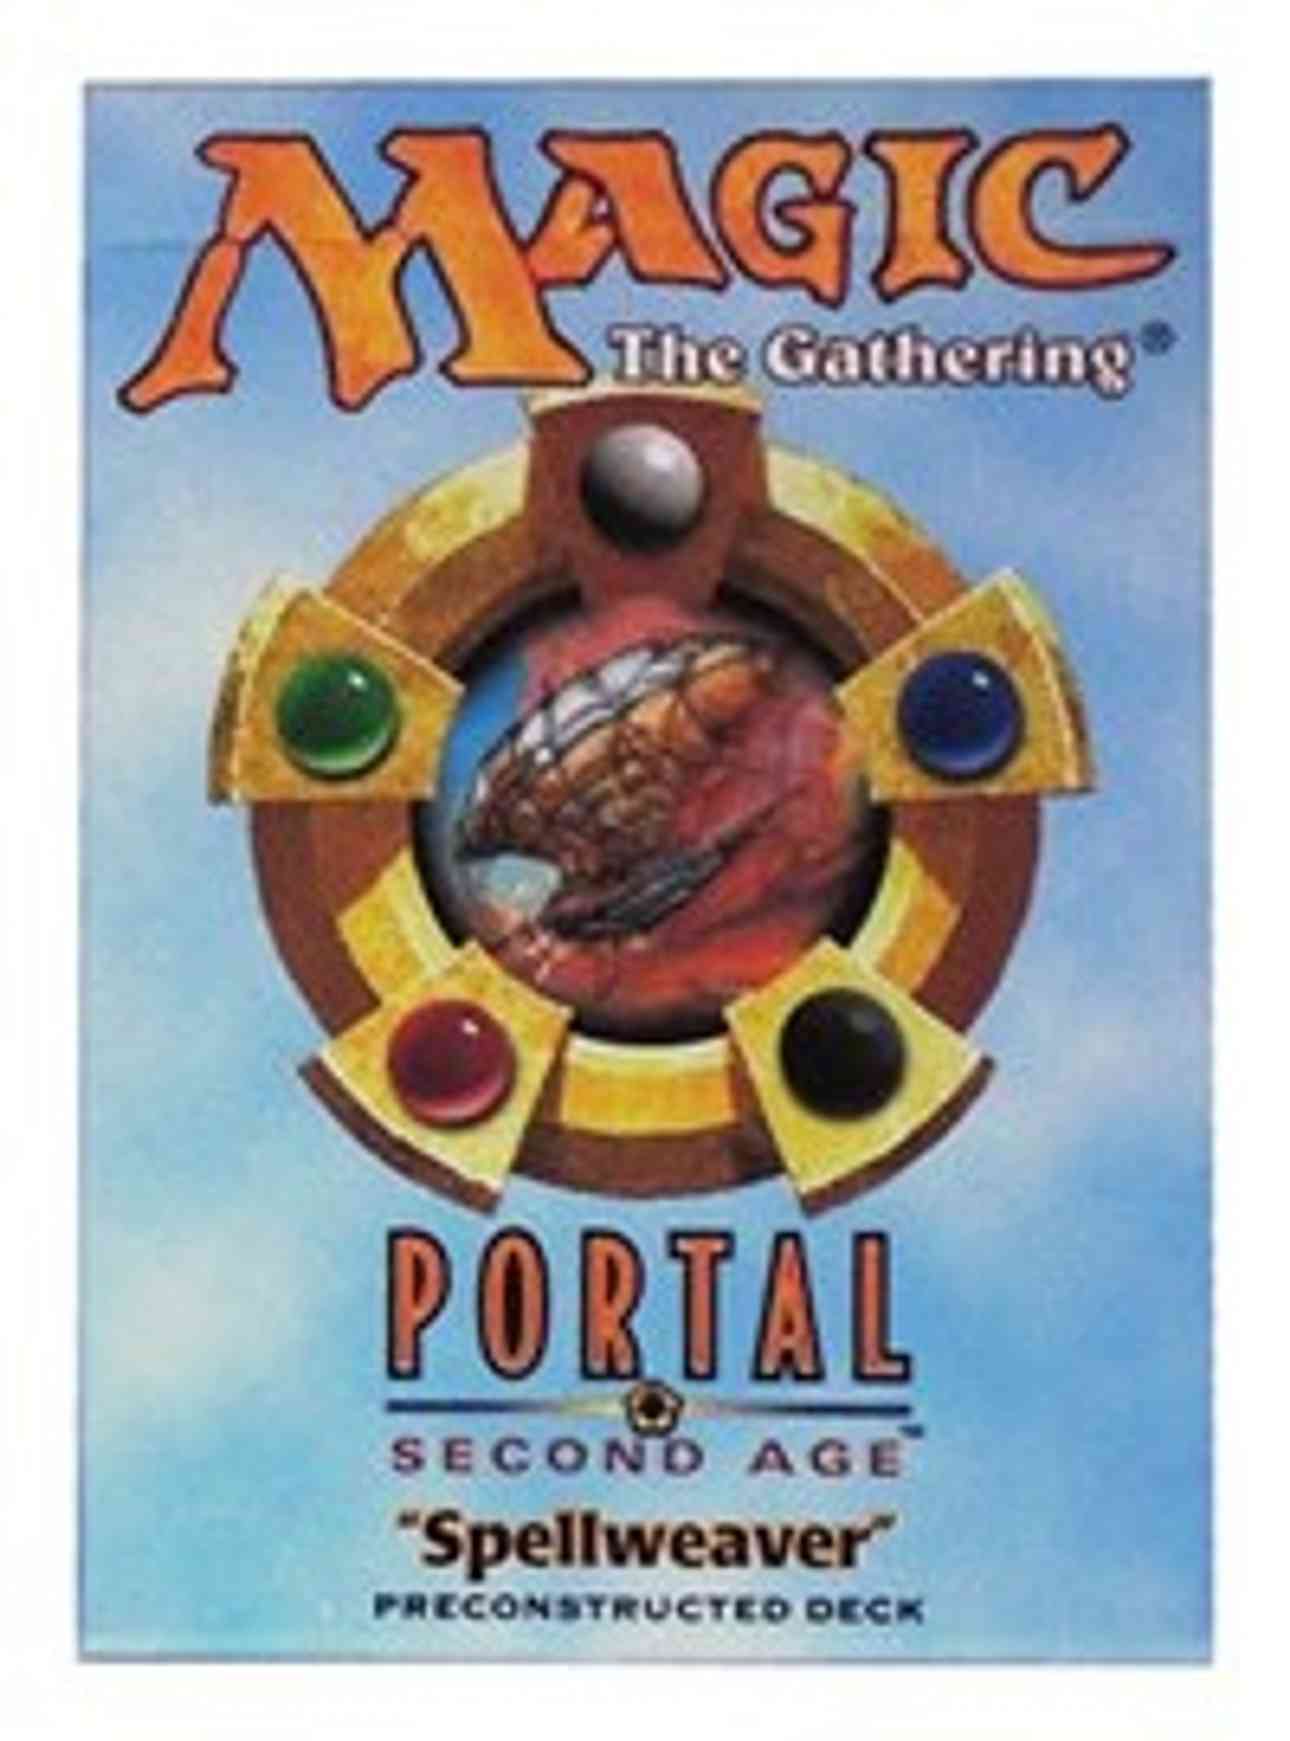 Portal Second Age Theme Deck - Spellweaver magic card front